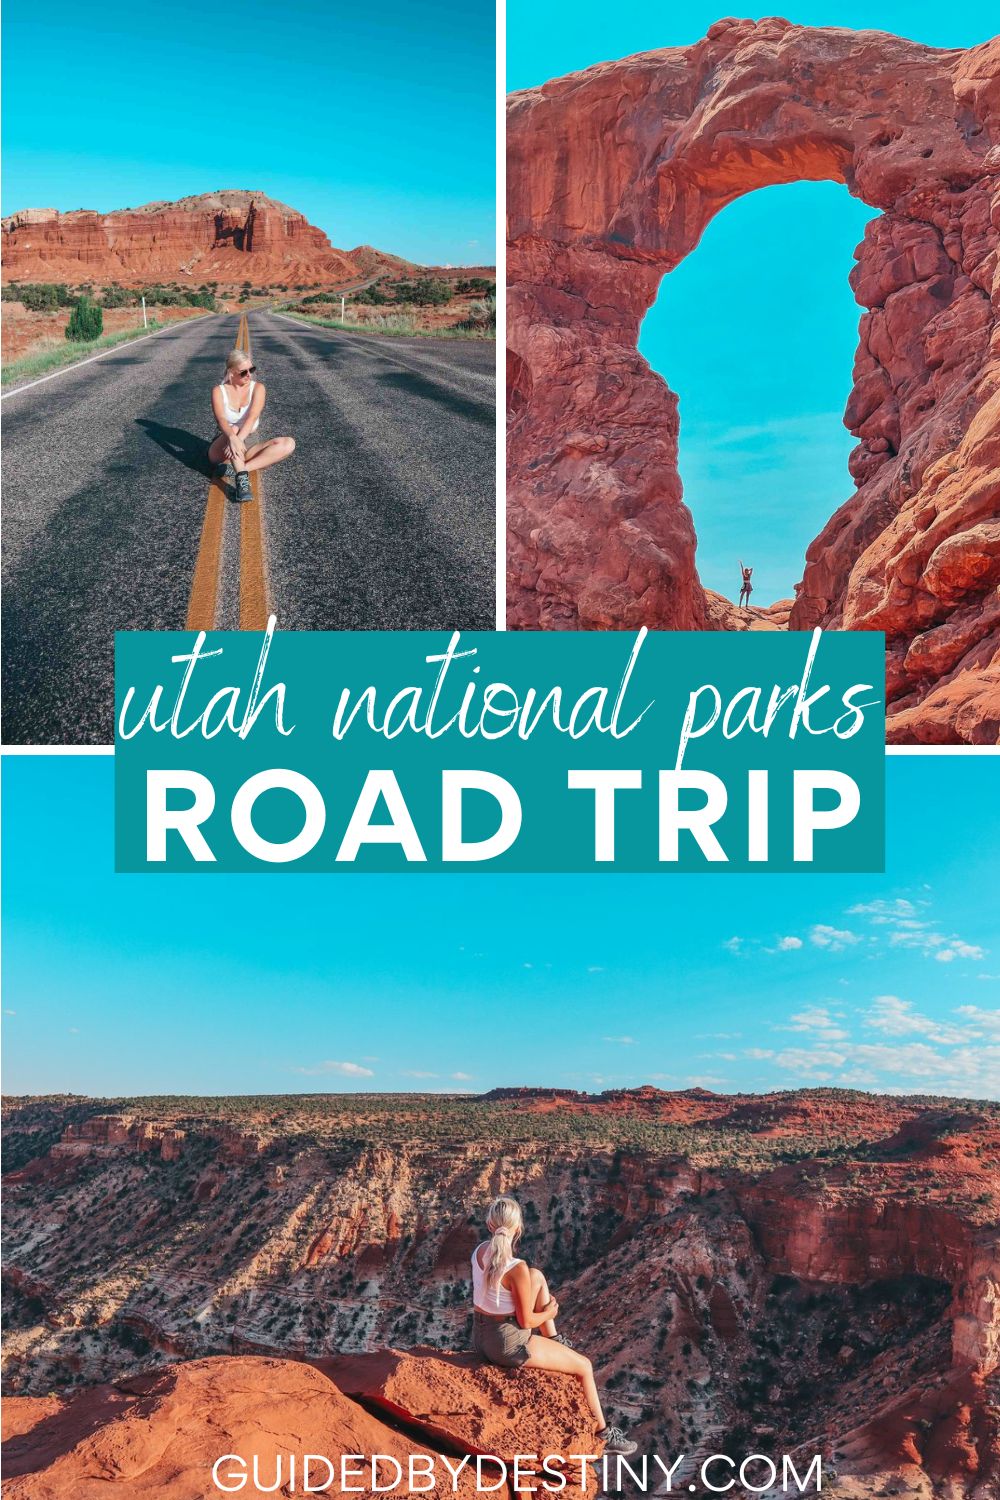 utah national parks road trip itinerary